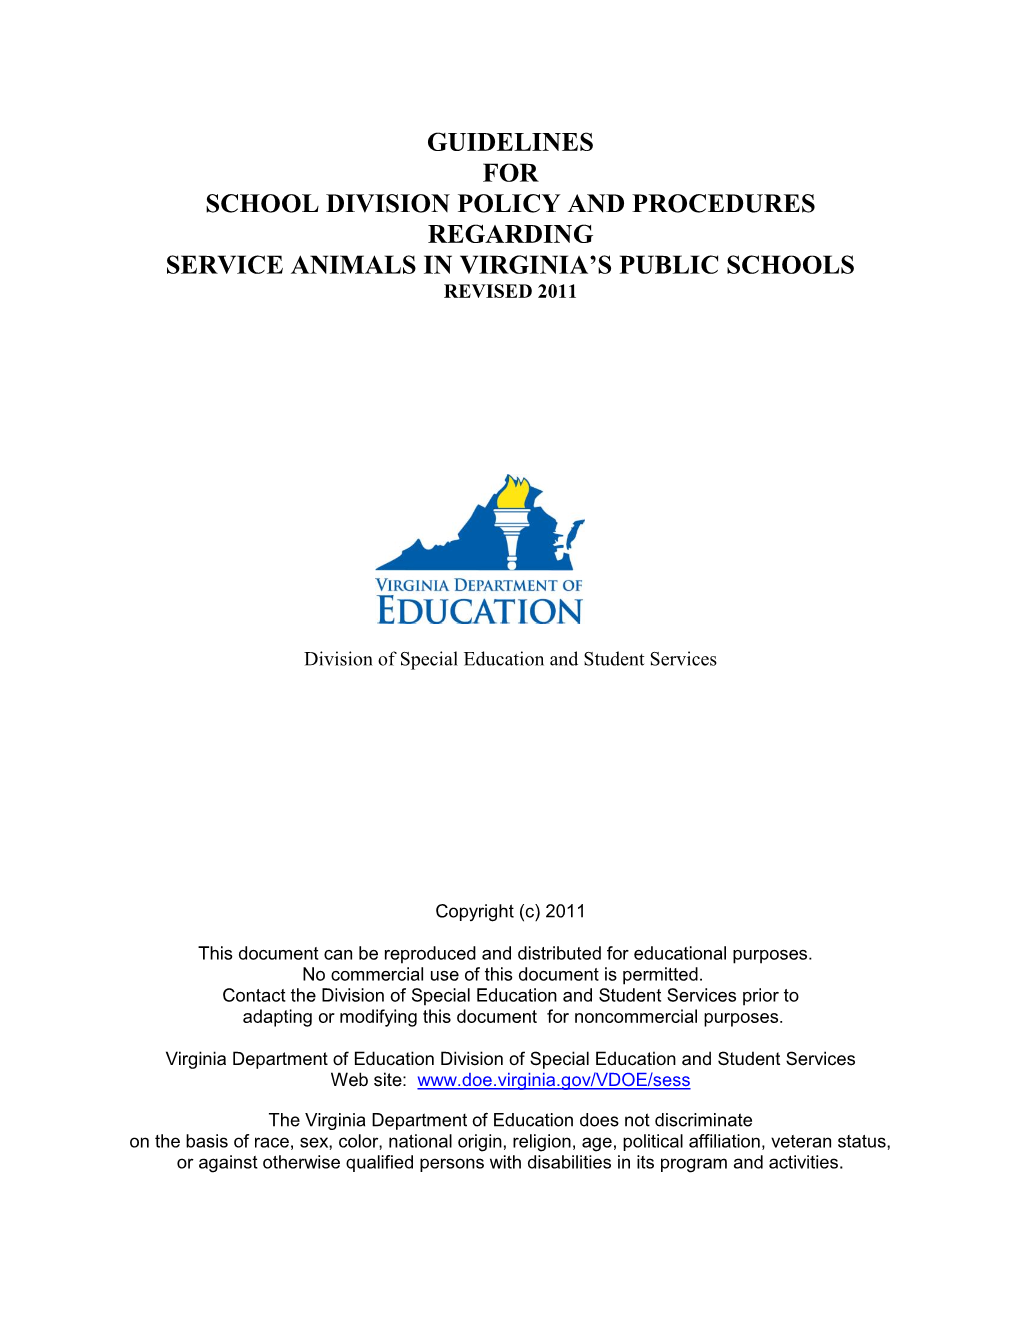 Guidelines for School Division Policy Regarding Service Dogs in Virginia’S Public Schools, 2008